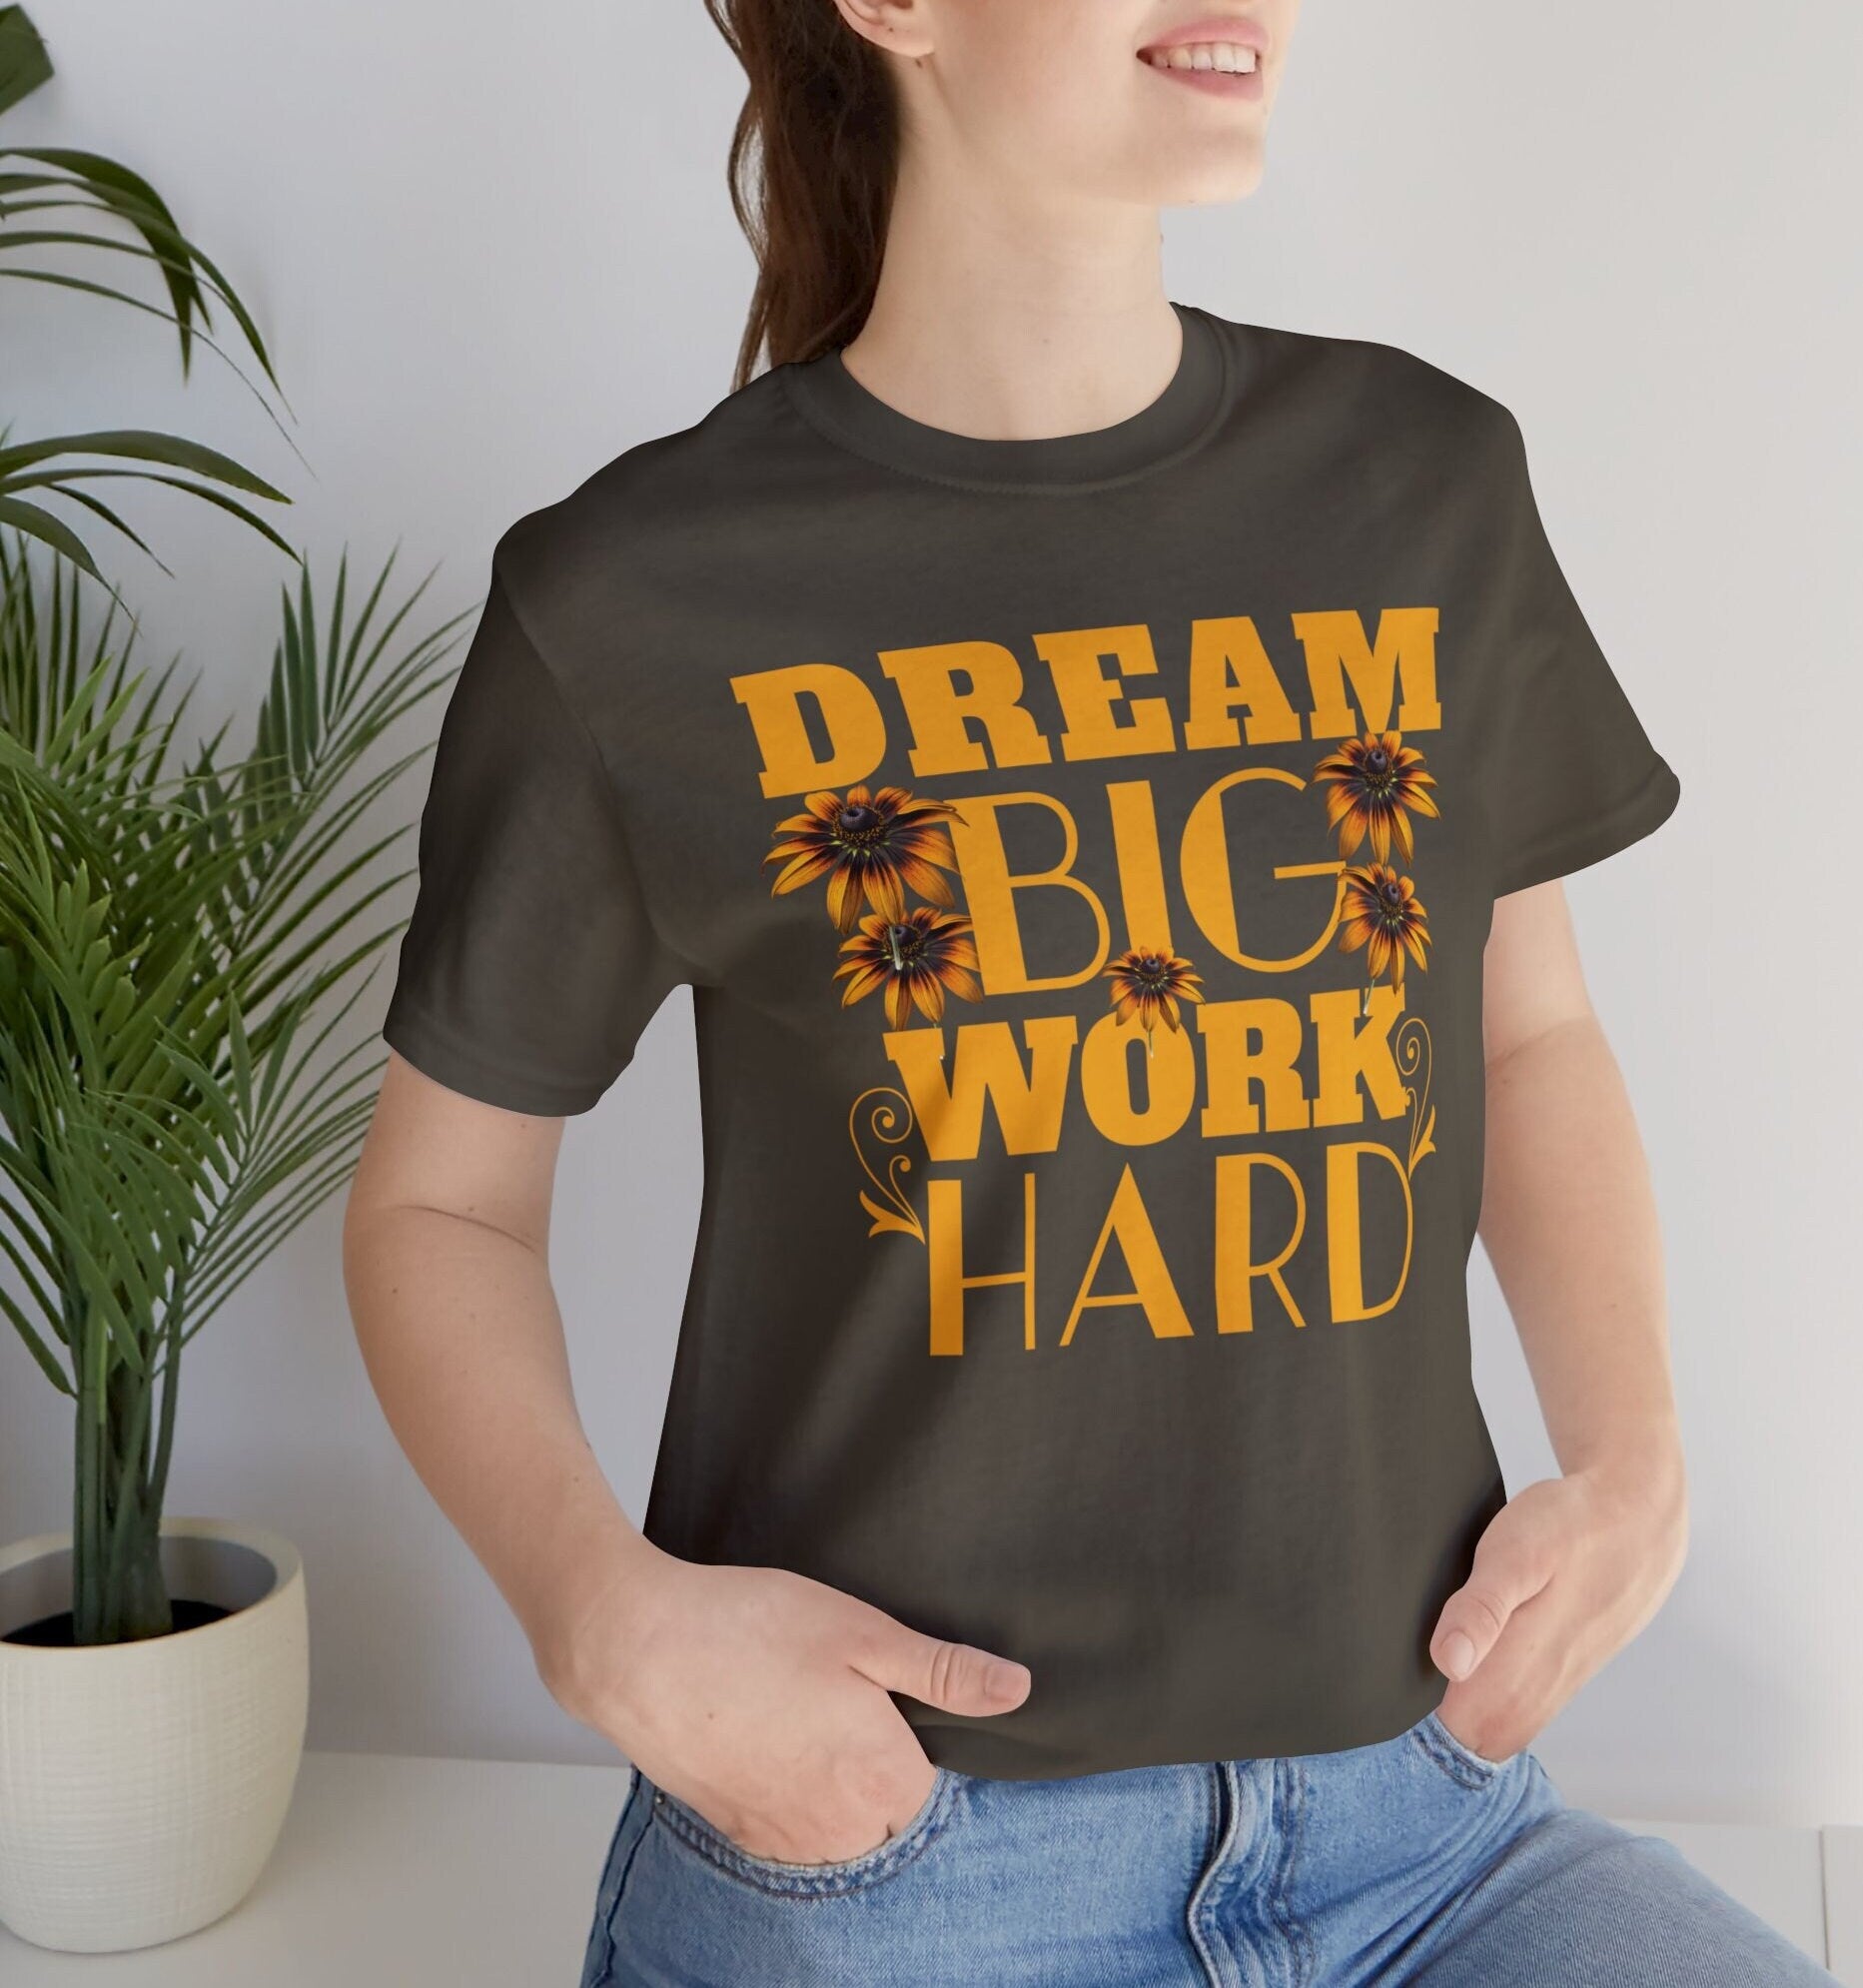 Dream Big Work Hard Tee, Inspirational Positive Tshirt